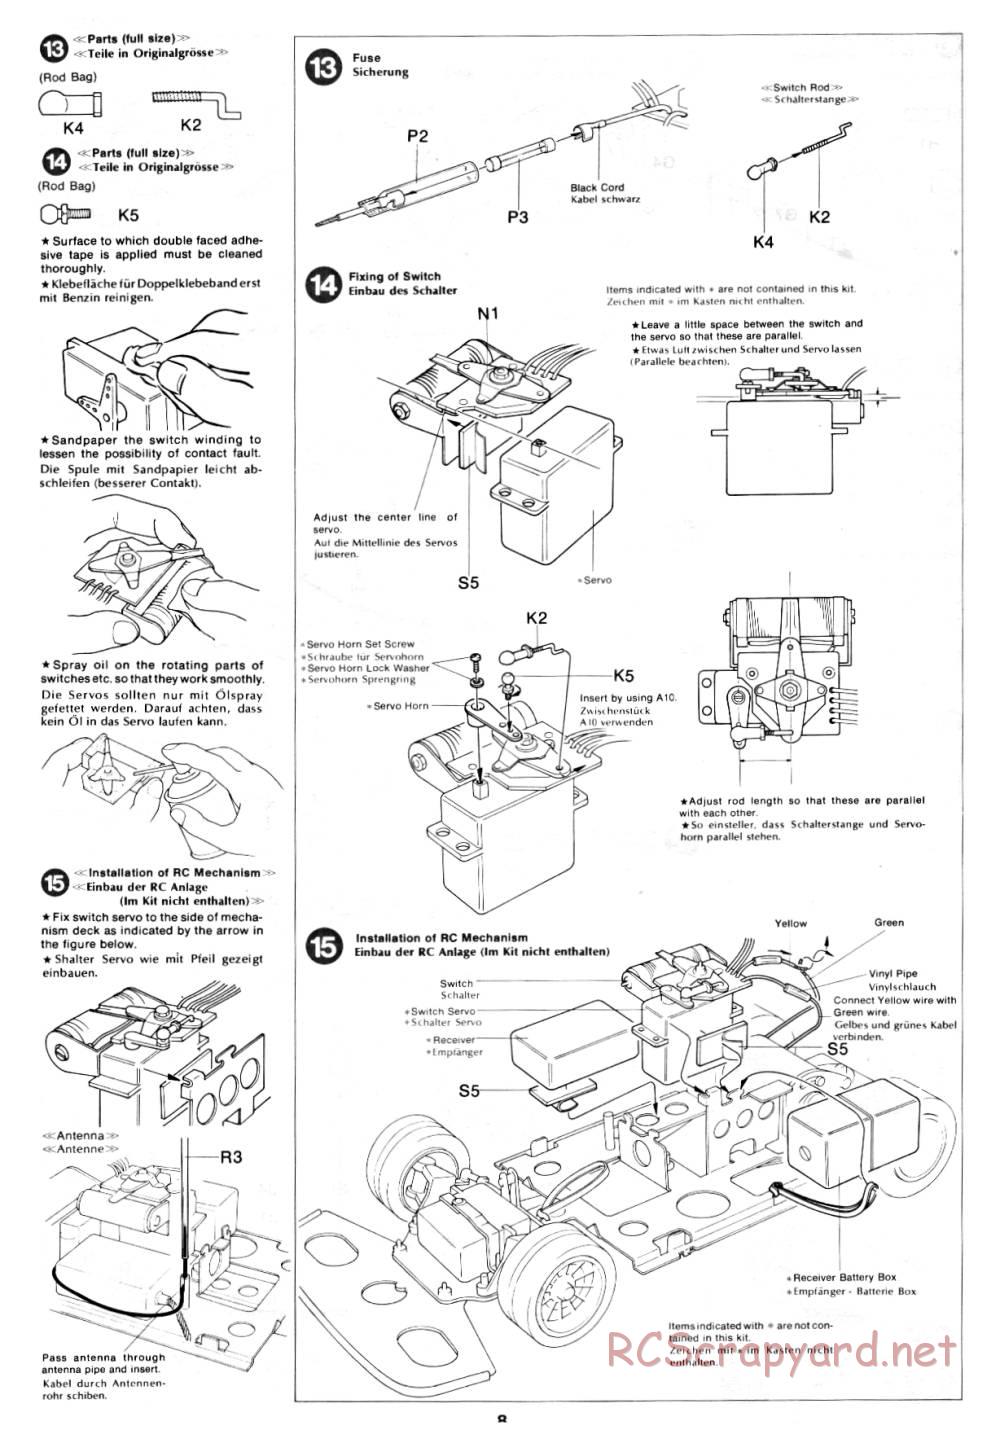 Tamiya - Toyota Celica LB Turbo Gr.5 (CS) - 58009 - Manual - Page 8